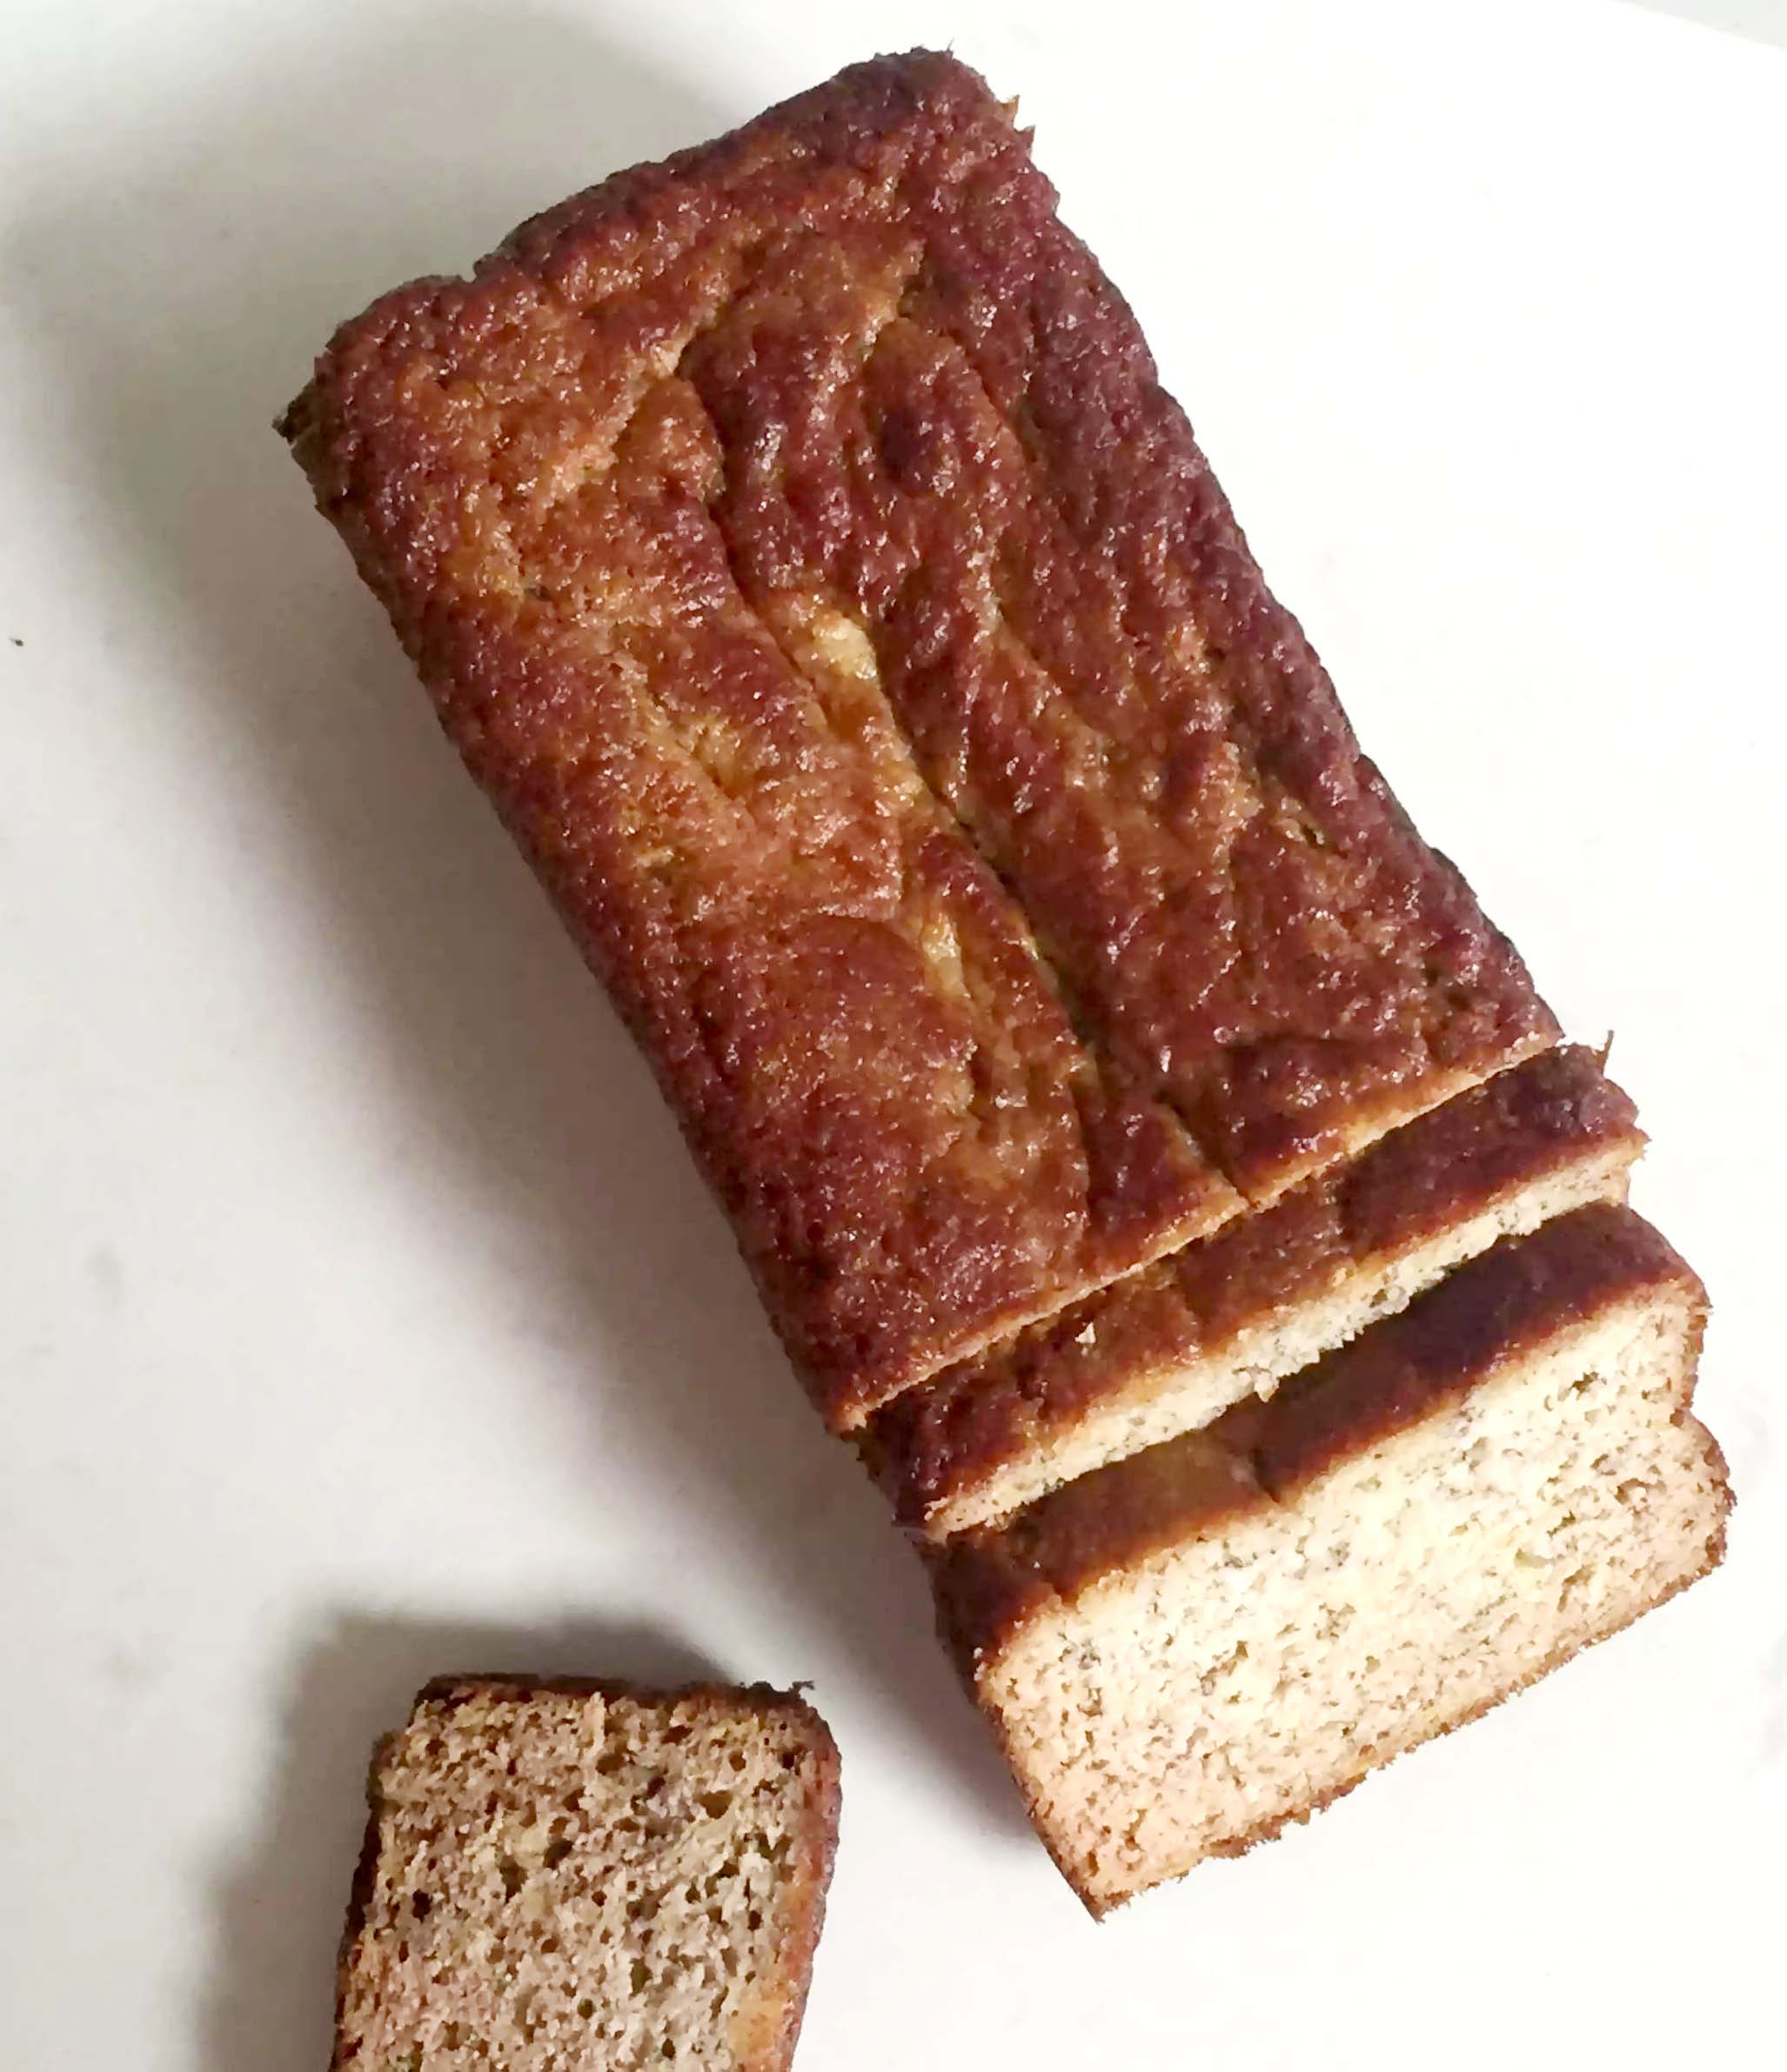 Grain Free Banana Bread by Emma Eats & Explores